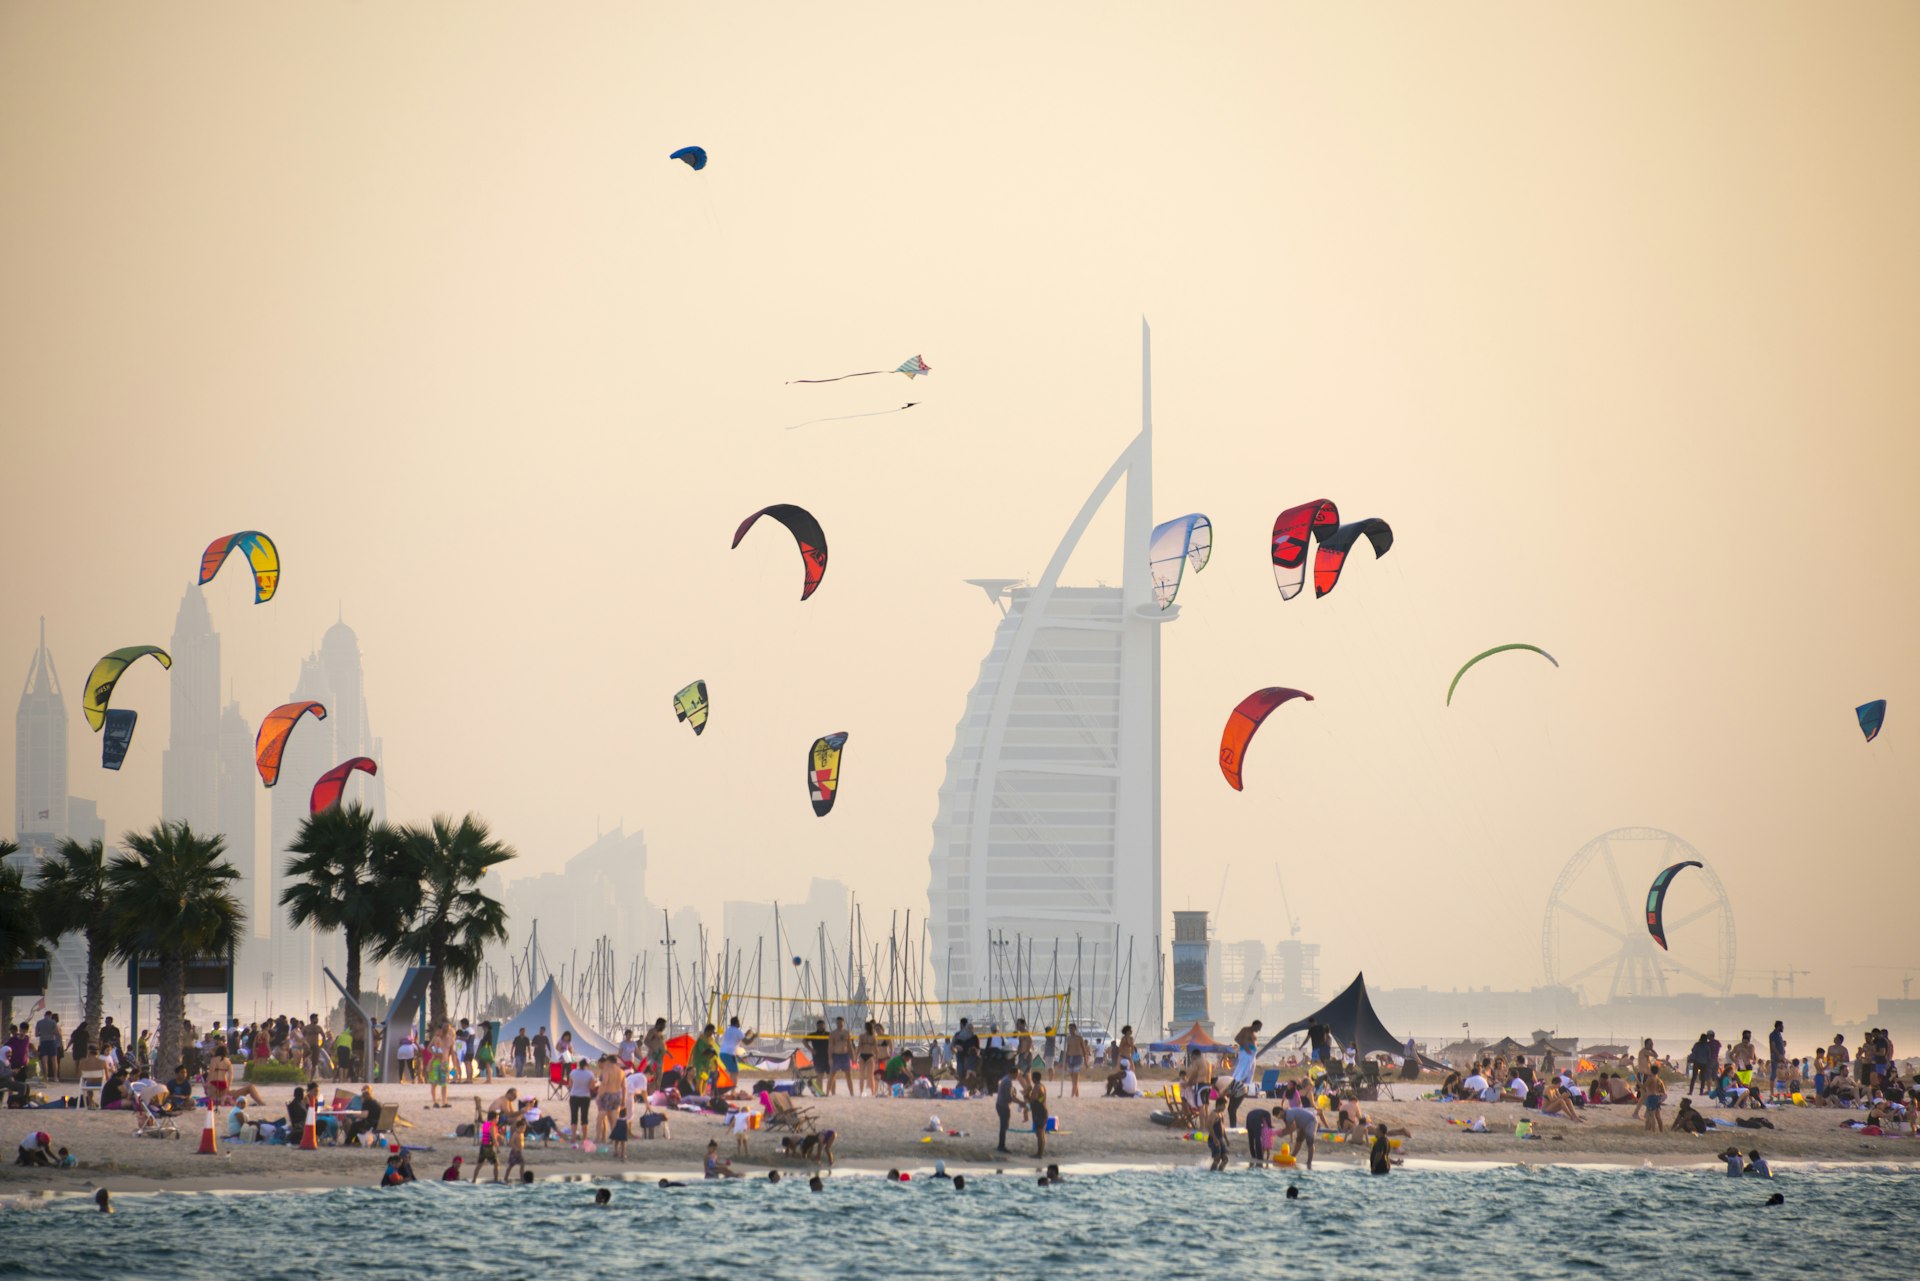 Kitesurfers on the wave at Kite Beach in Dubai, United Arab Emirates